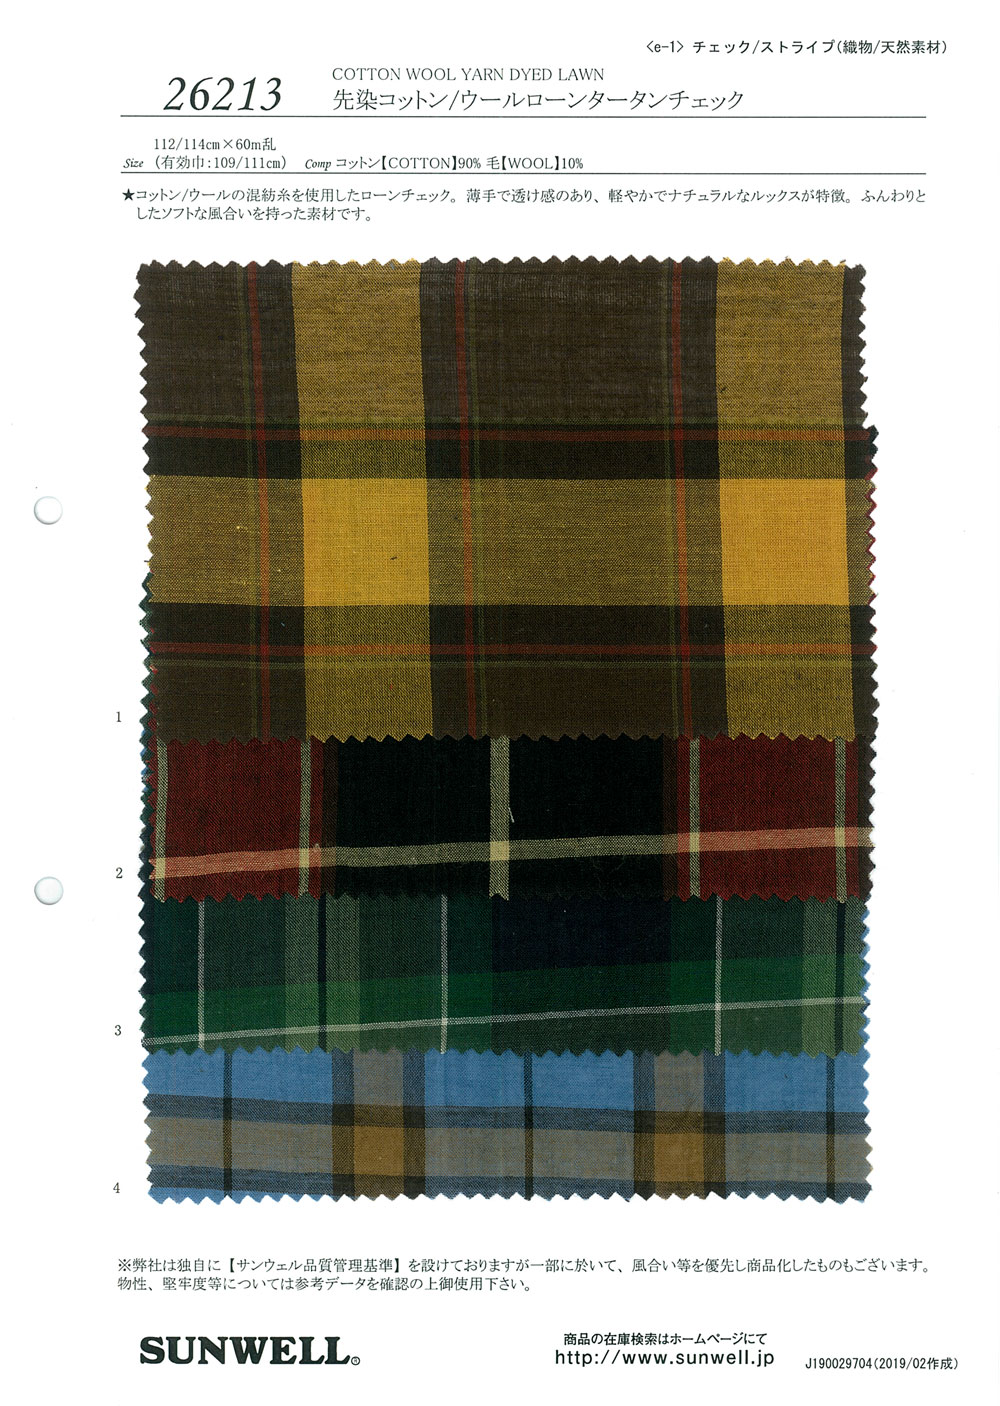 26213 Yarn-dyed Cotton / Wool Lawn Tartan Check[Textile / Fabric] SUNWELL